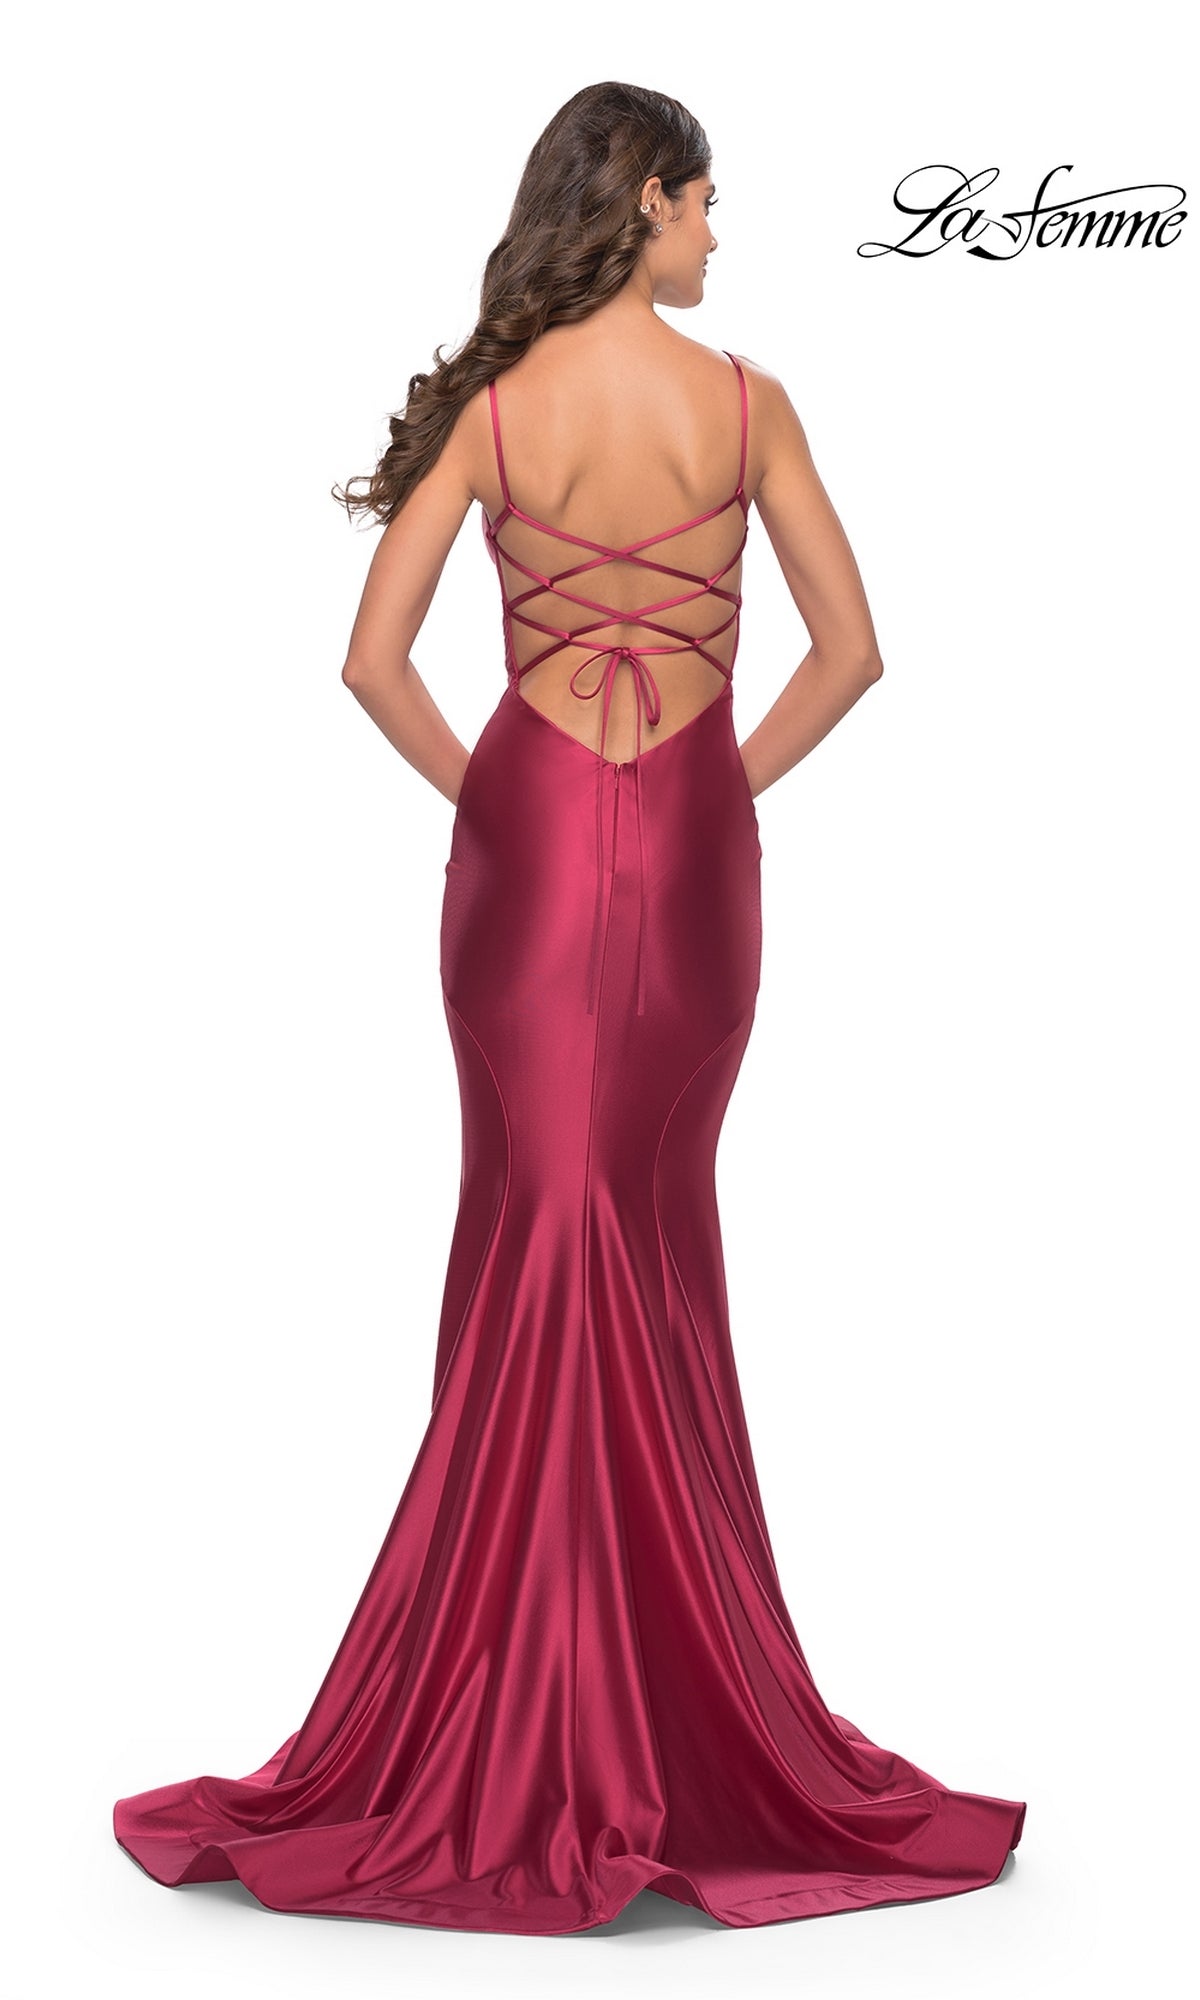  La Femme 31295 Formal Prom Dress